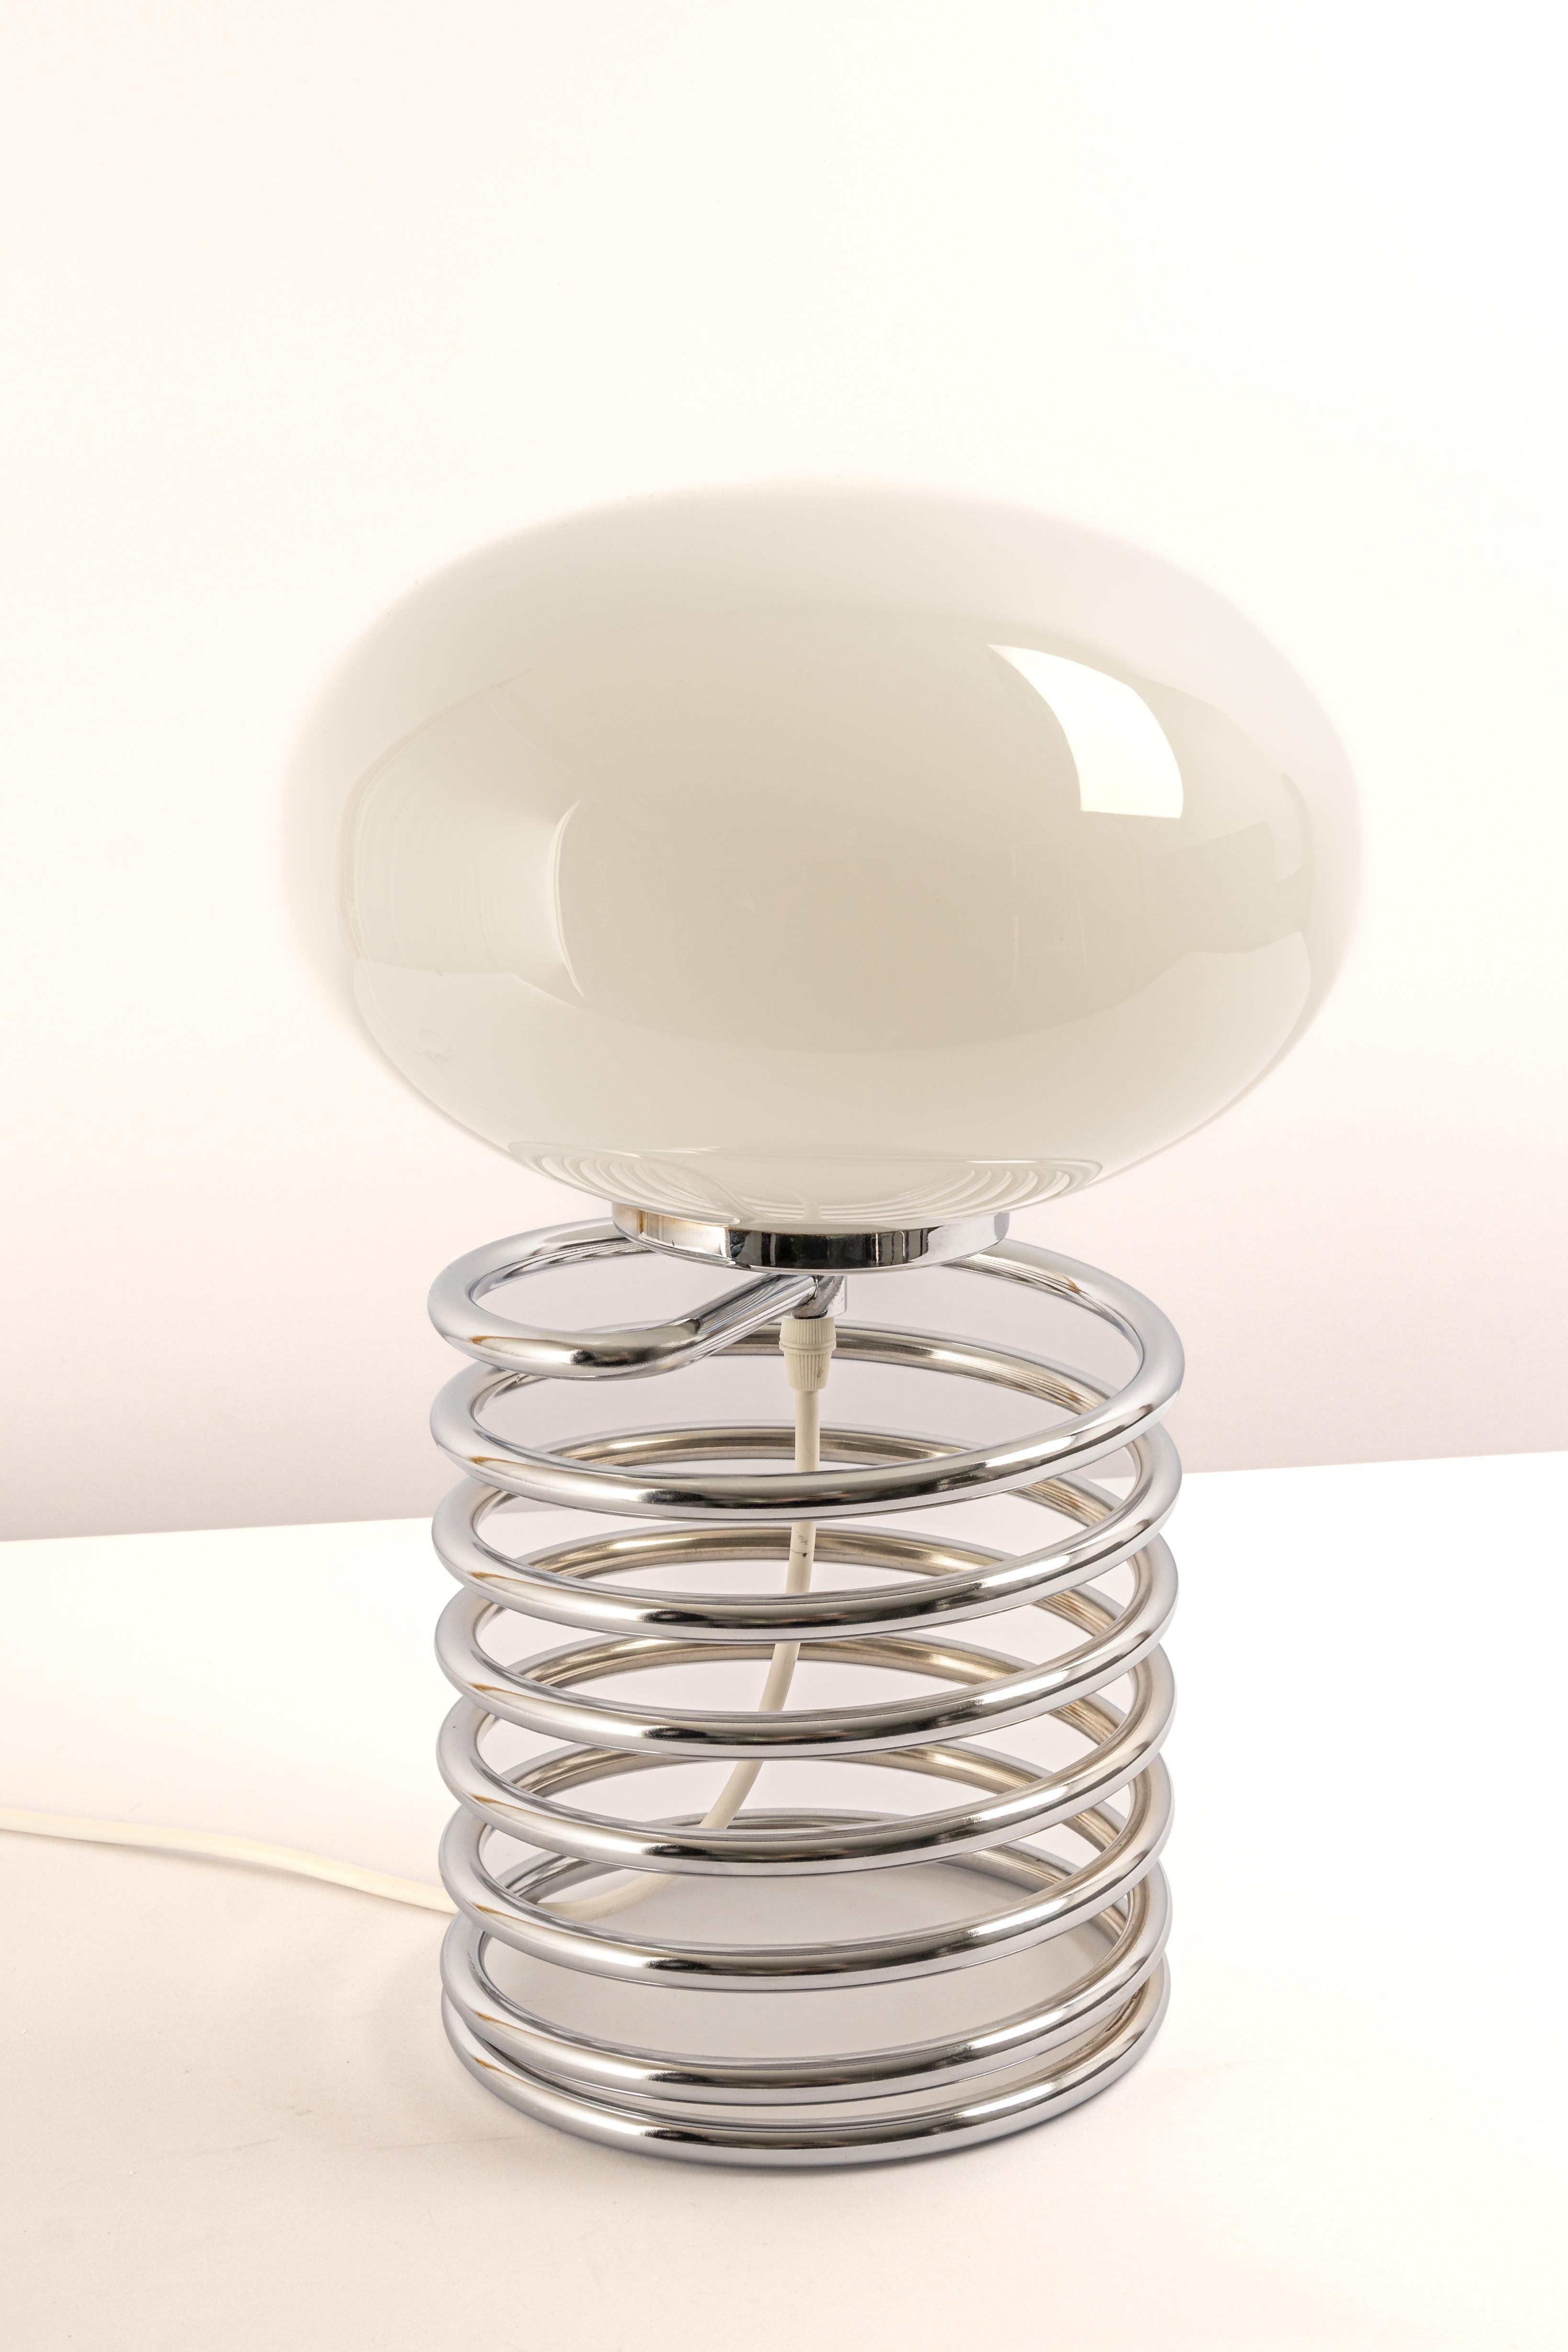 Mid-Century Modern 1 of 2 Stunning Design Spiral Table Lamp, Ingo Maurer, 1970s For Sale